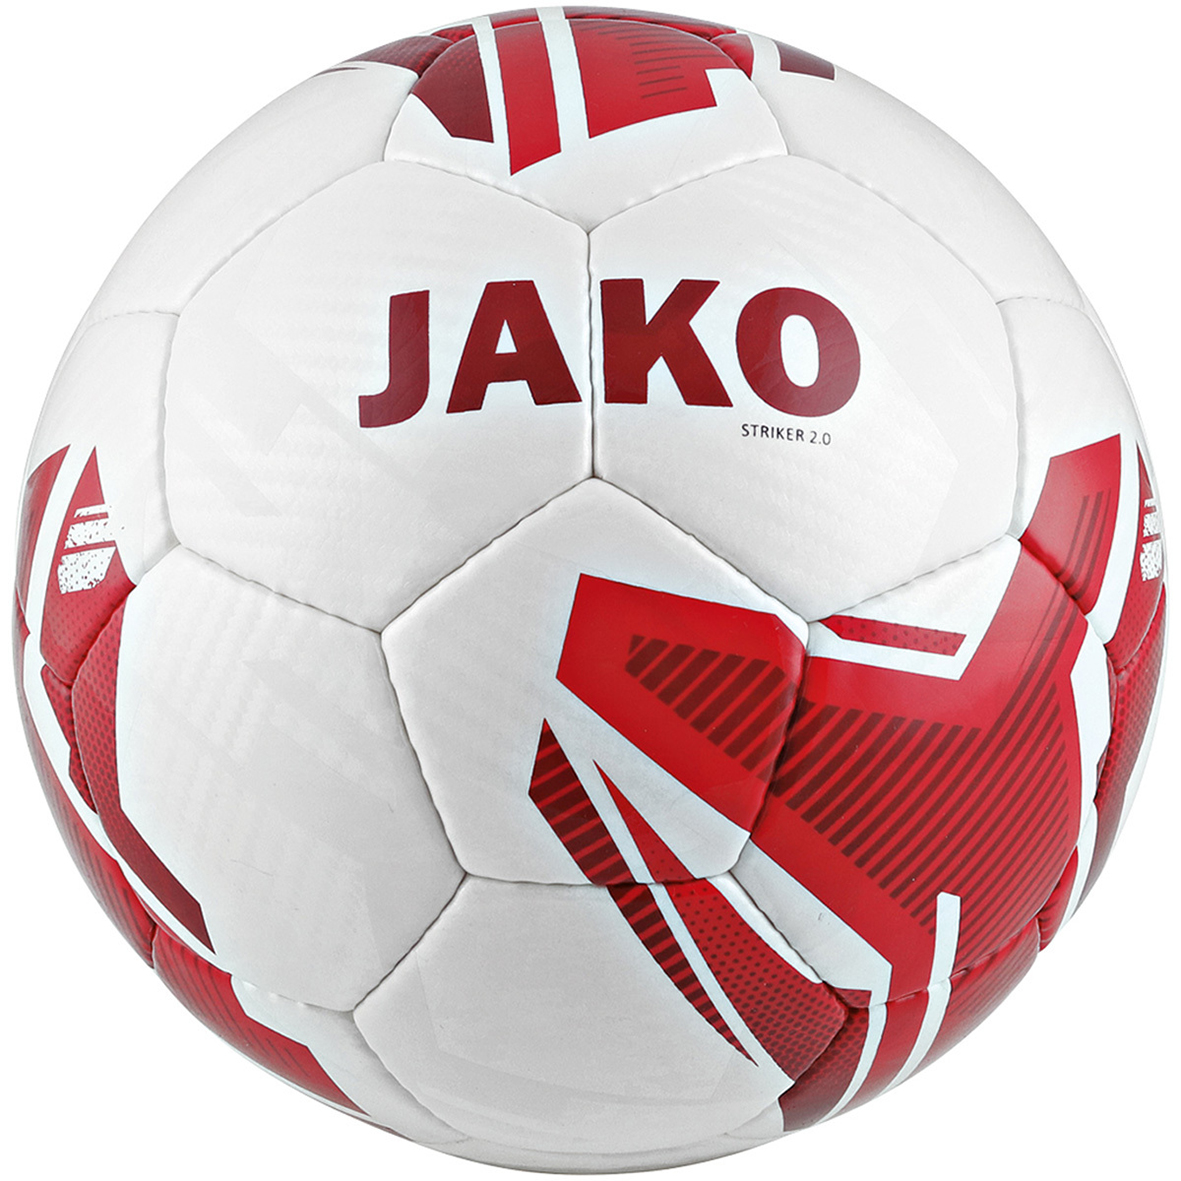 TRAINING BALL JAKO STRIKER 2.0, WHITE-RED.